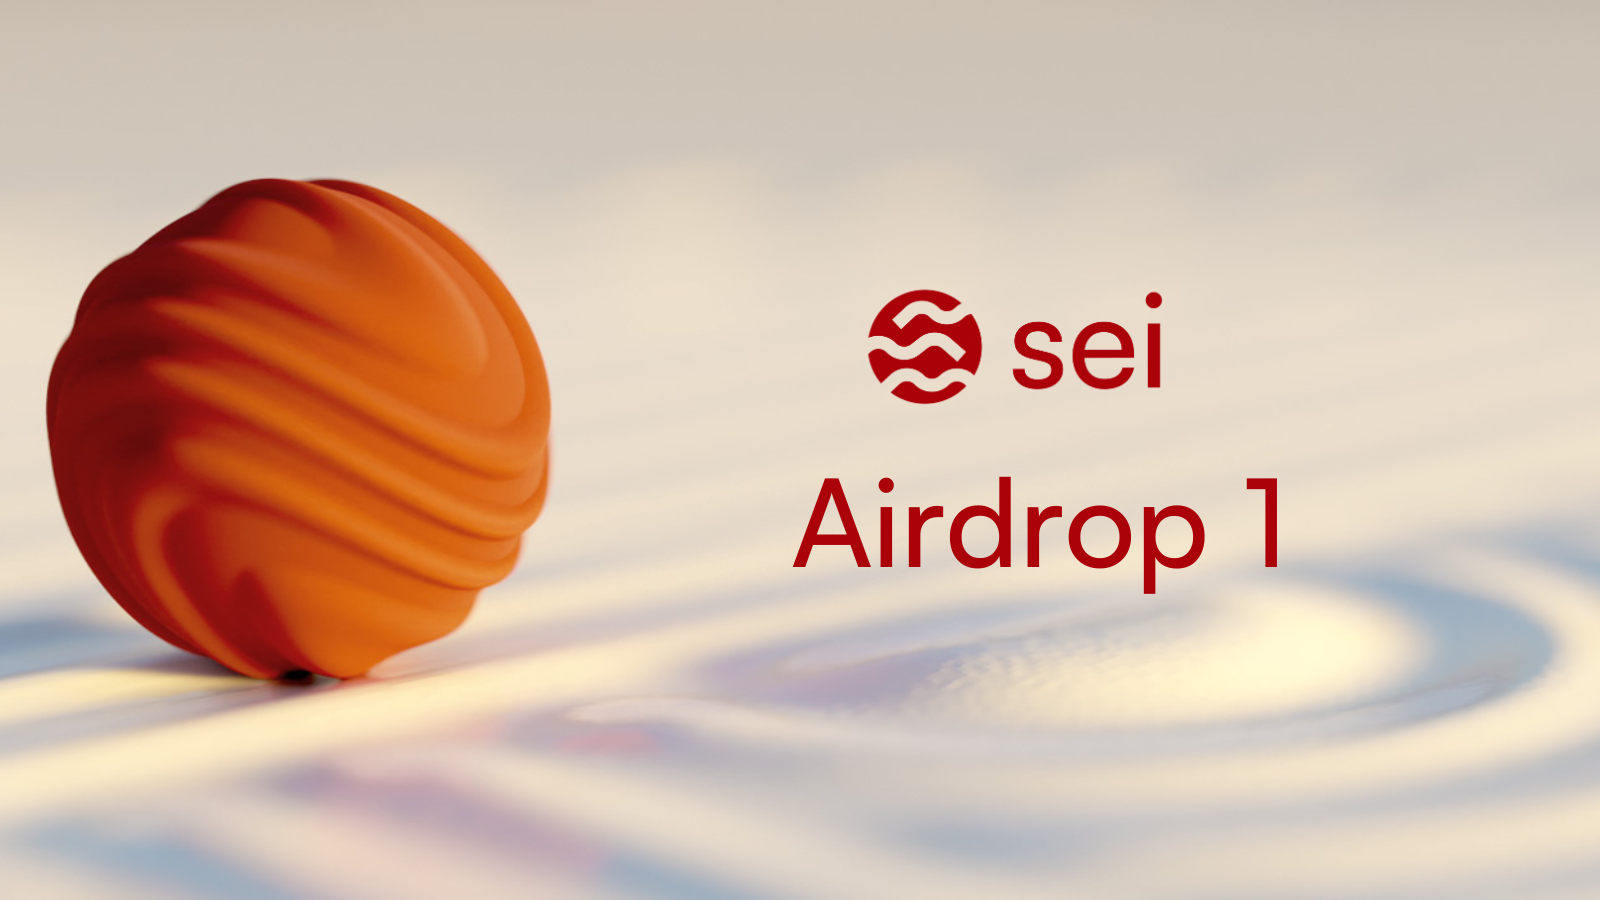 The Sei Airdrop